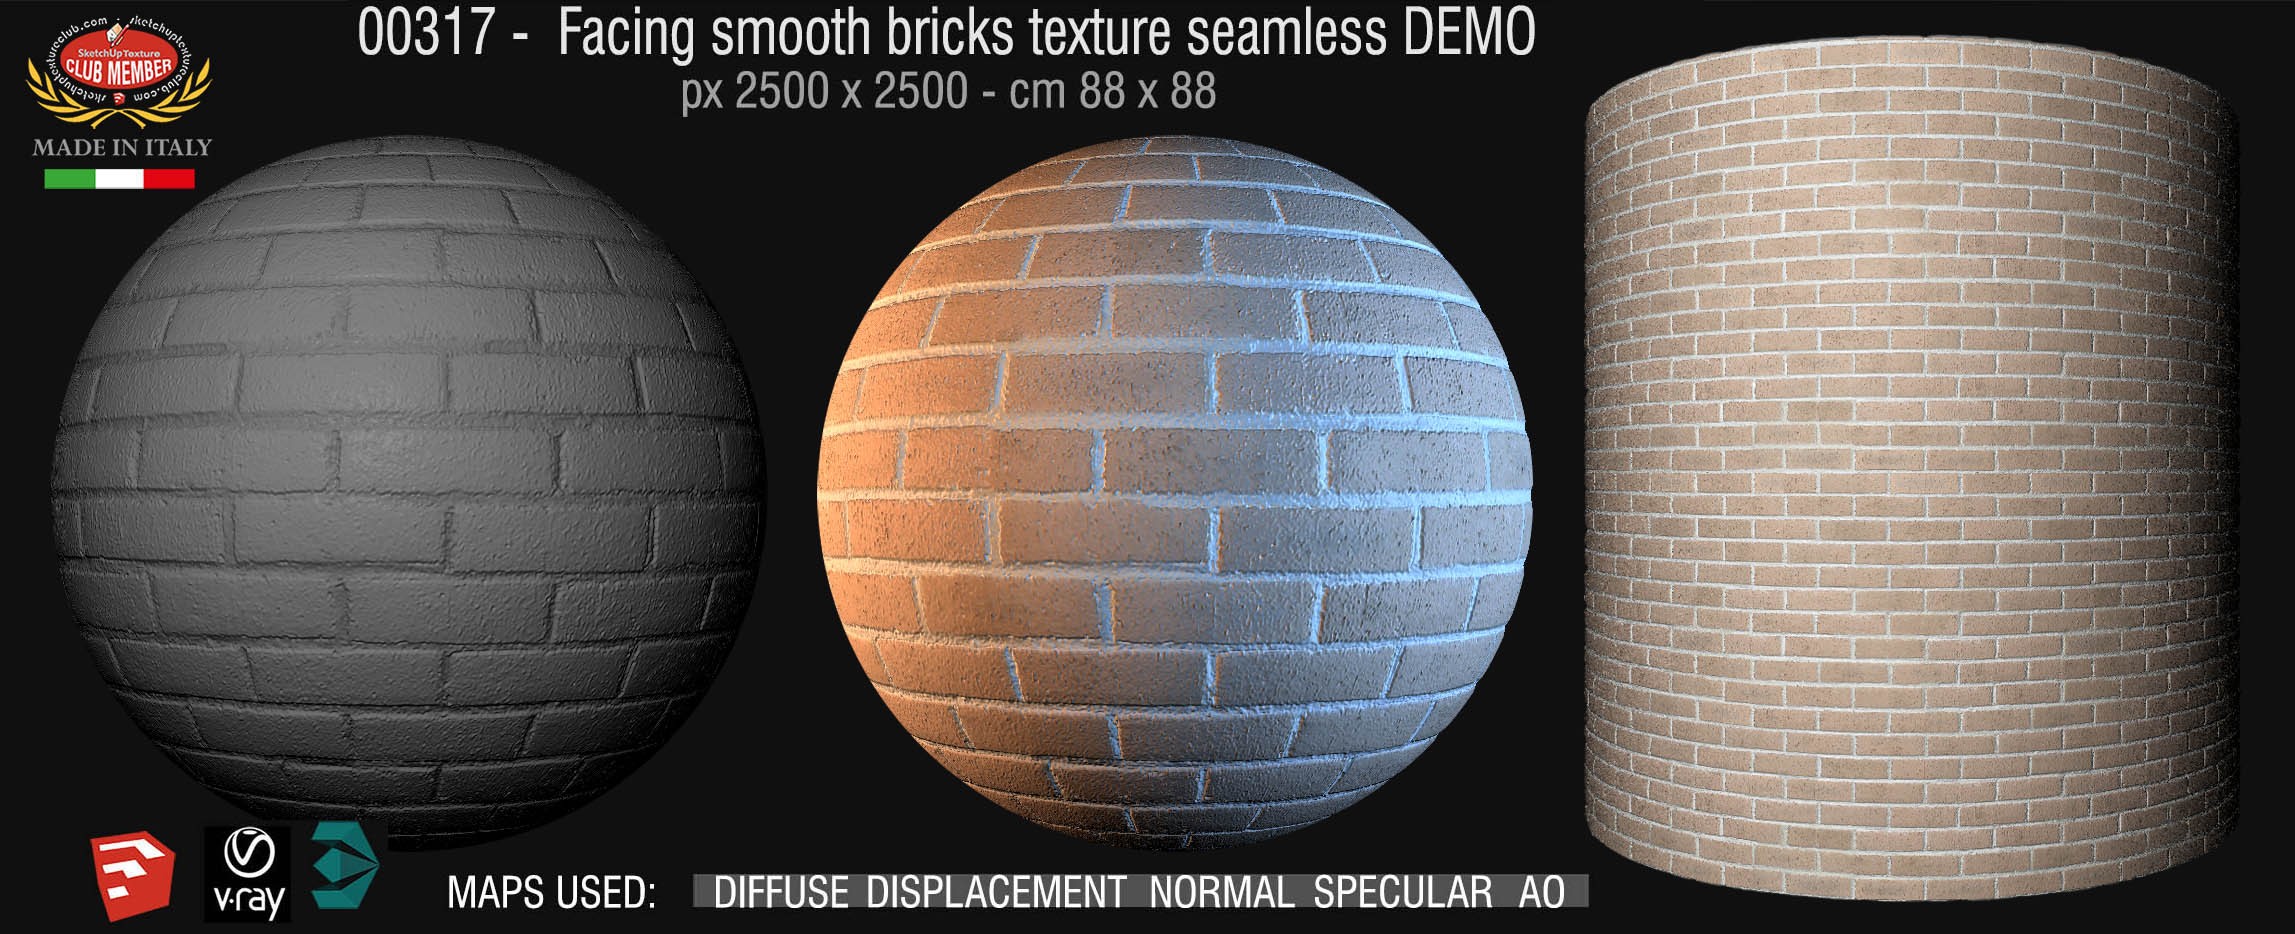 00317 Facing smooth bricks texture seamless + maps DEMO